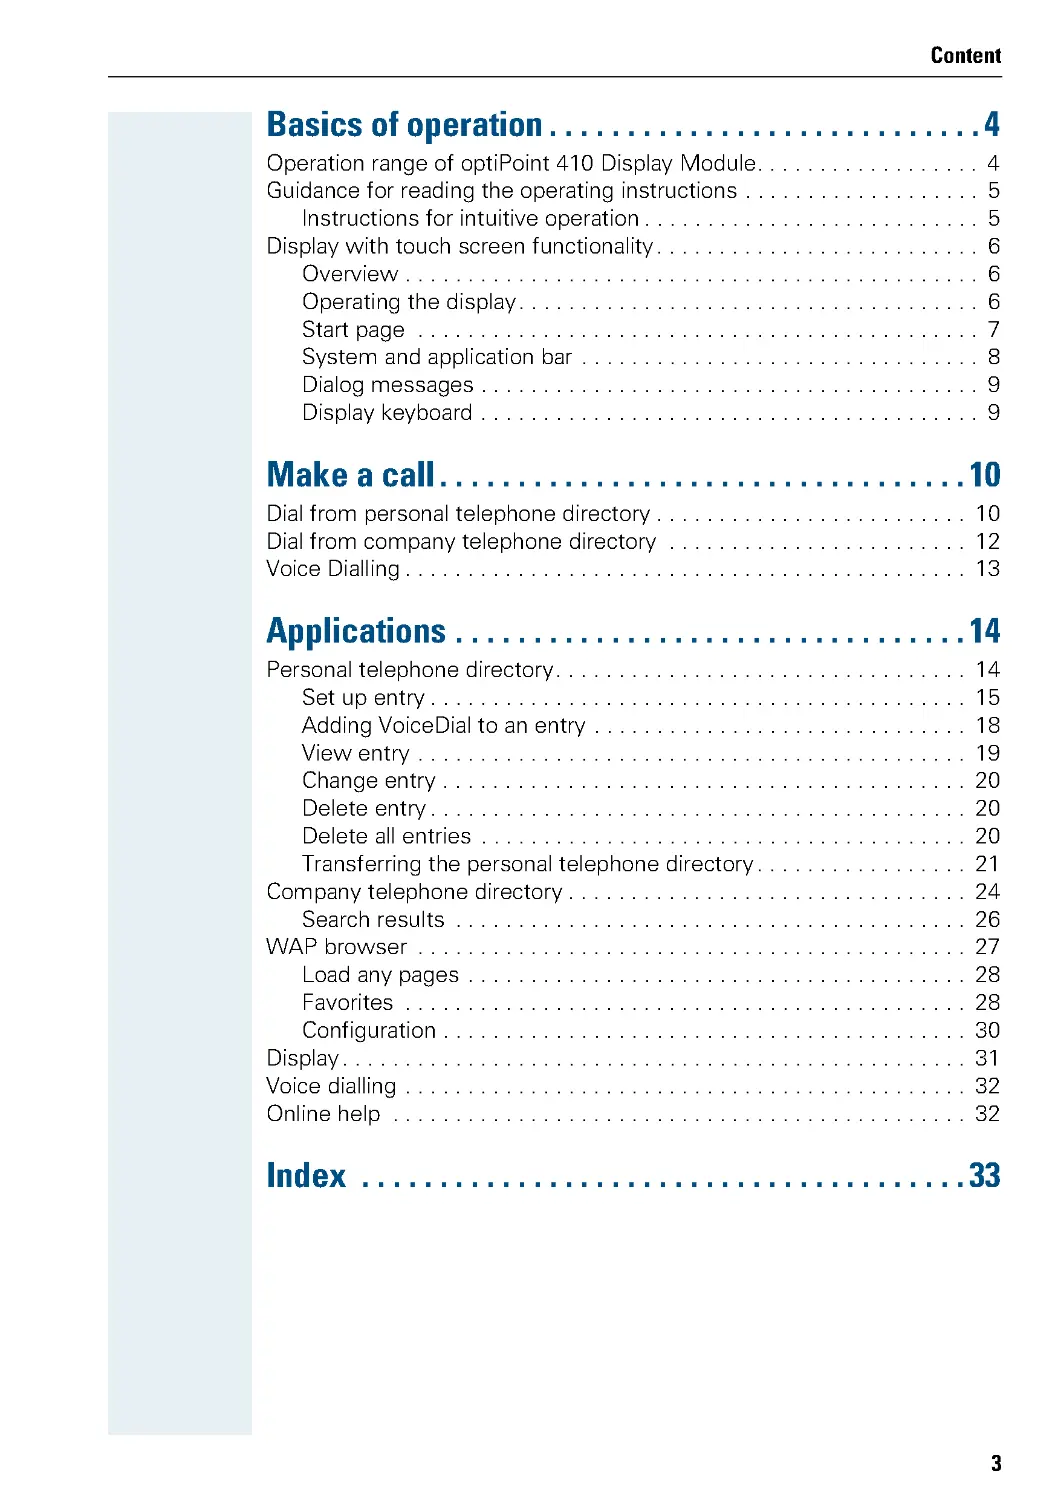 Make a call 10
Applications 14
Index 33